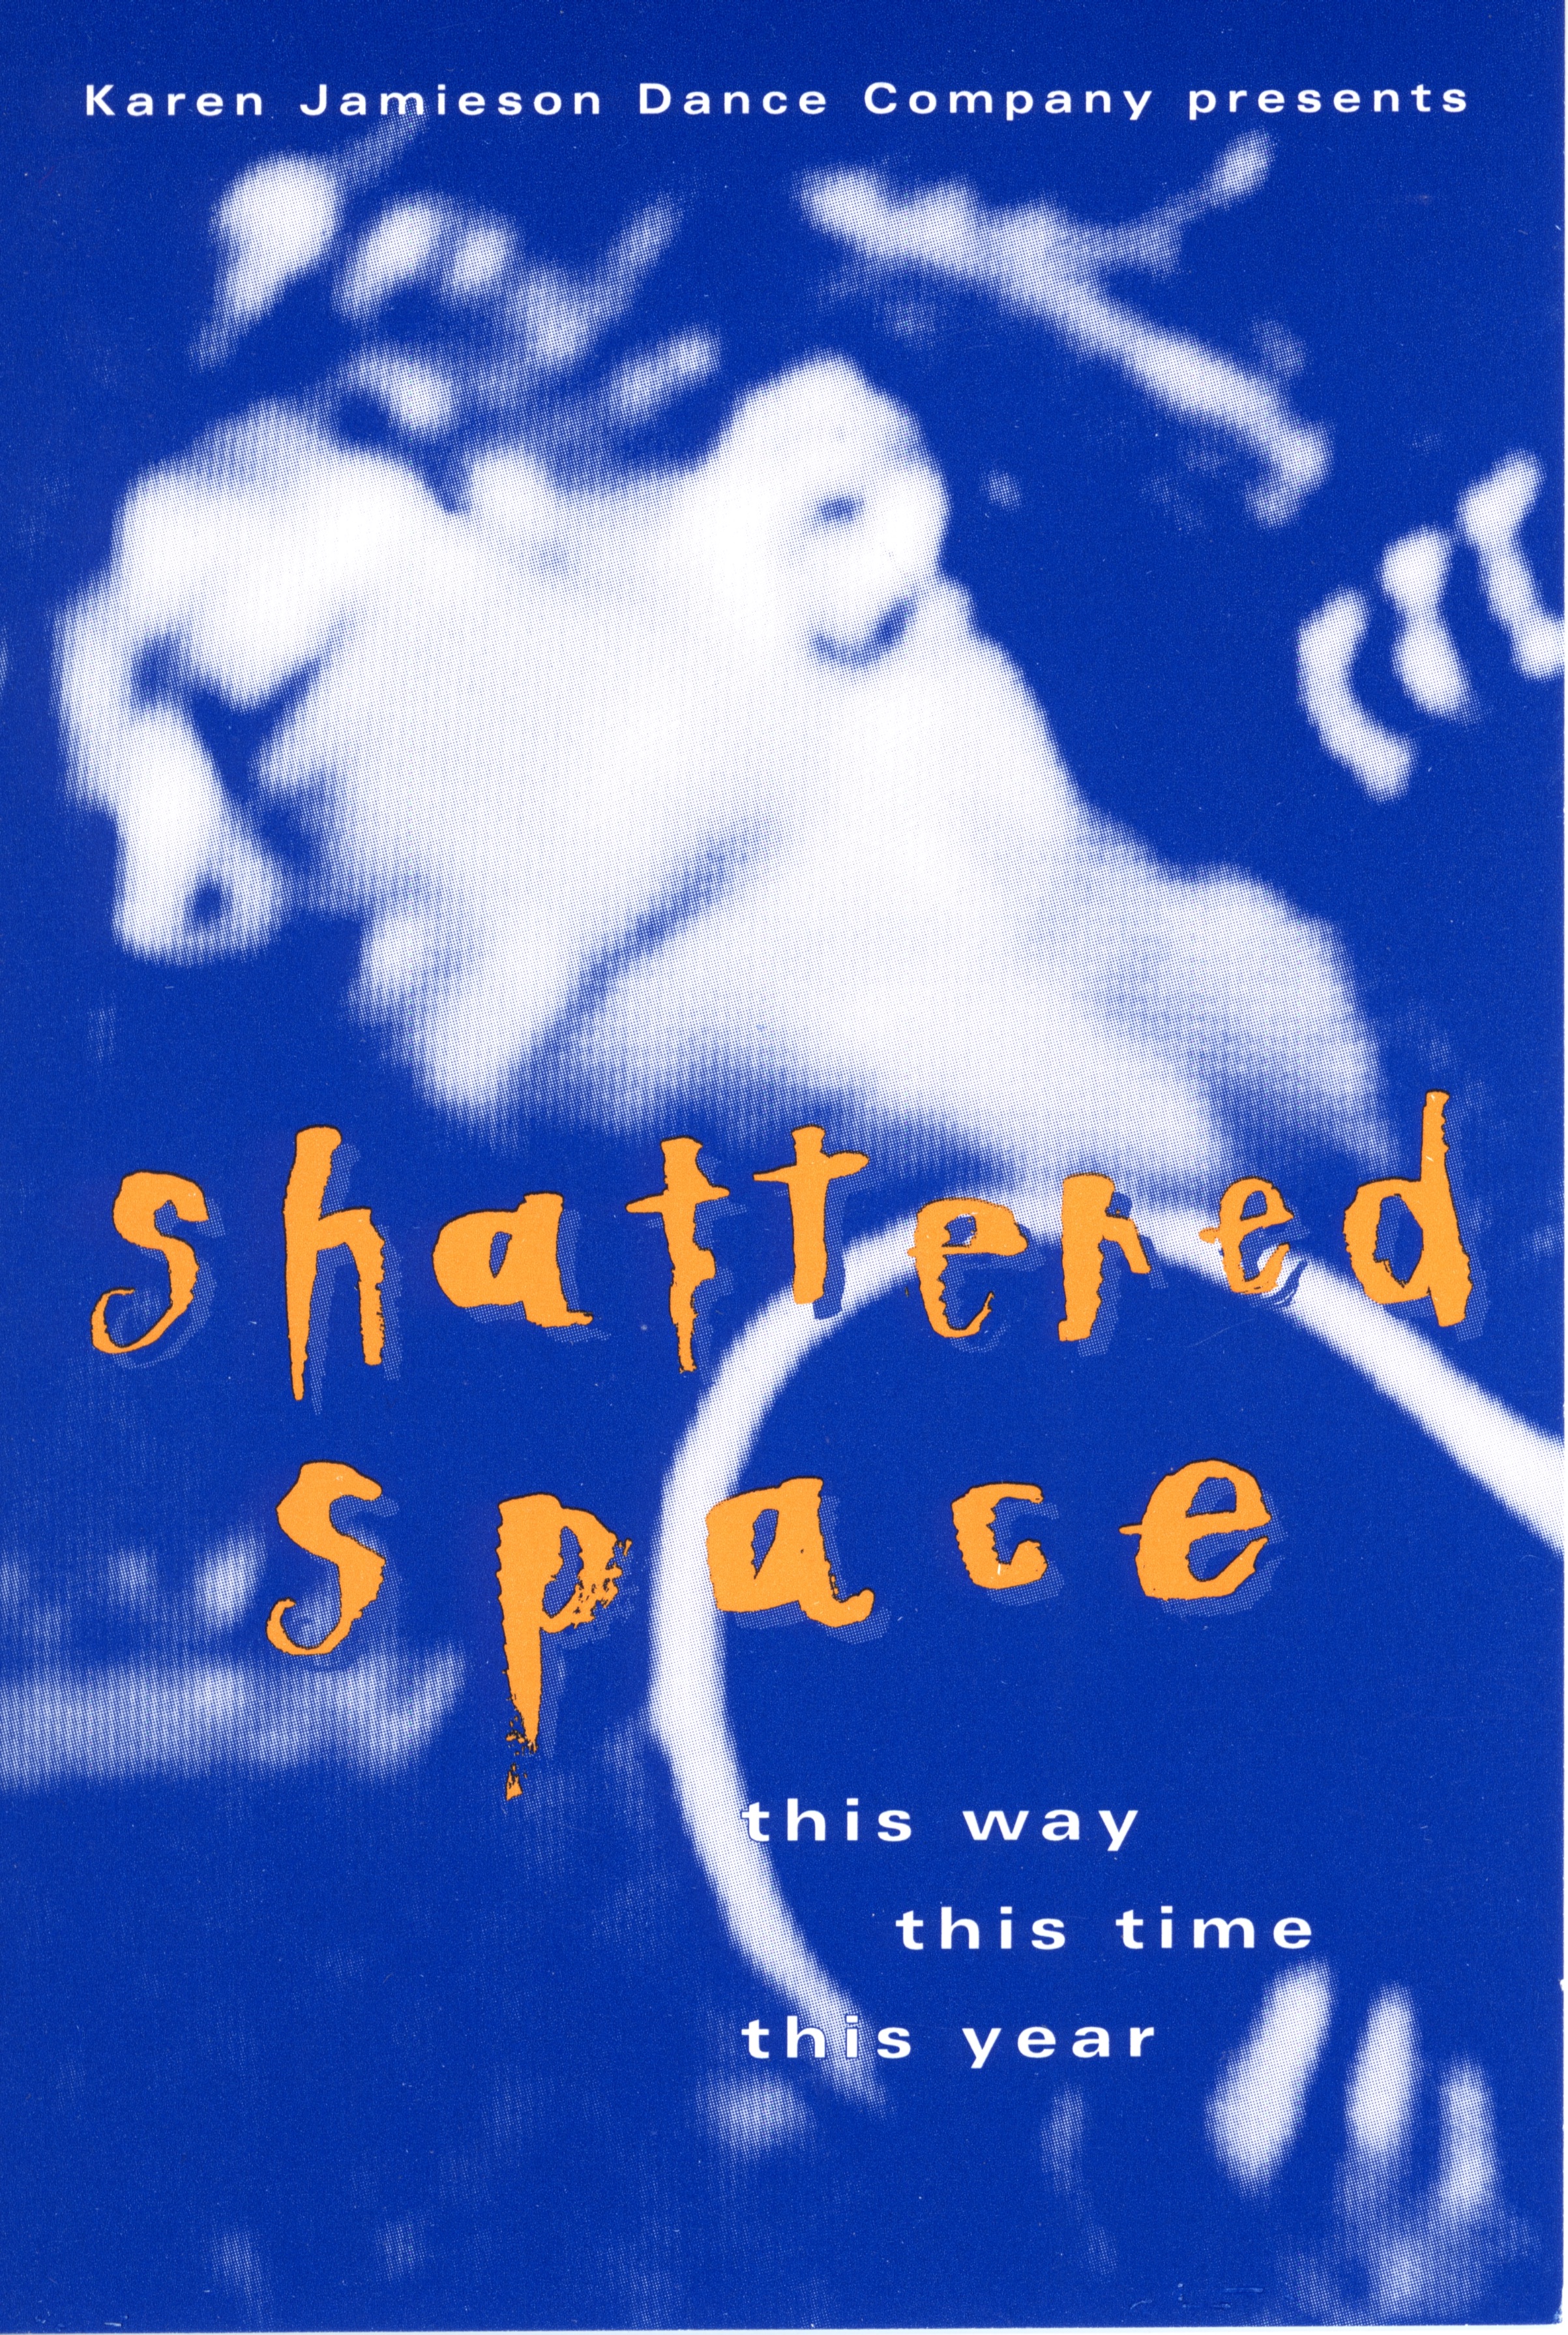 Shattered_Space_1996_handbill_front_06.jpg